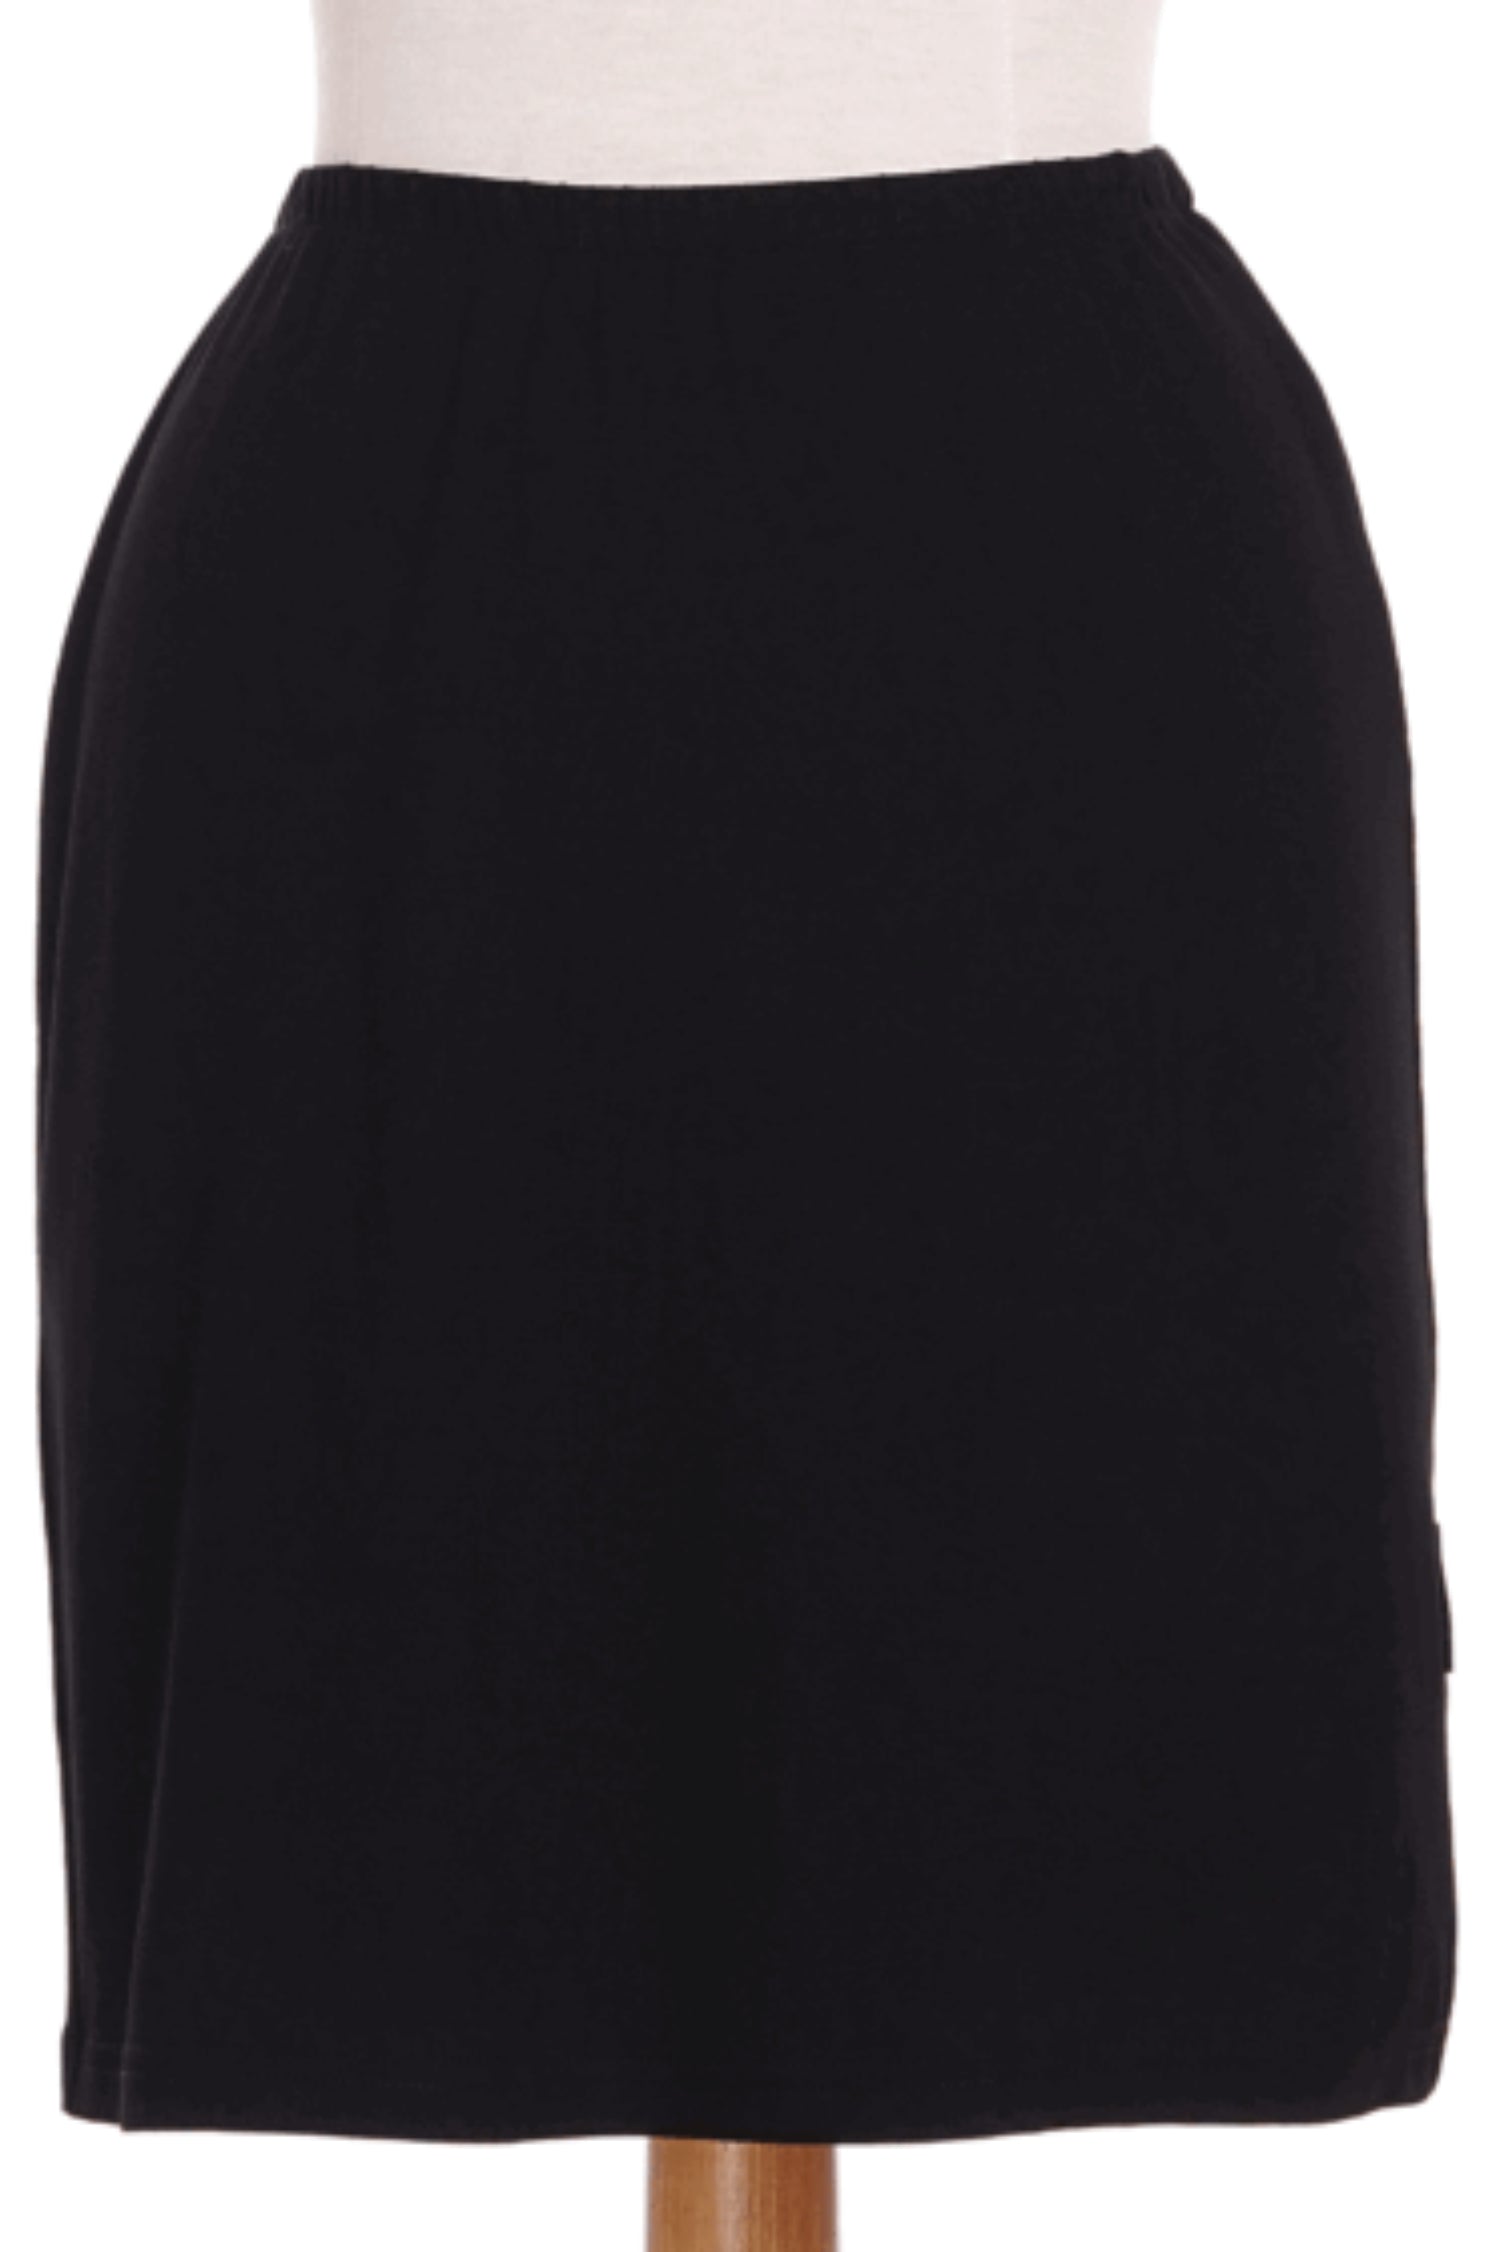 Cigogne Skirt by RNSP, Black, knee-length, elastic waist, straight cut, sizes XS-XXL, made in Quebec